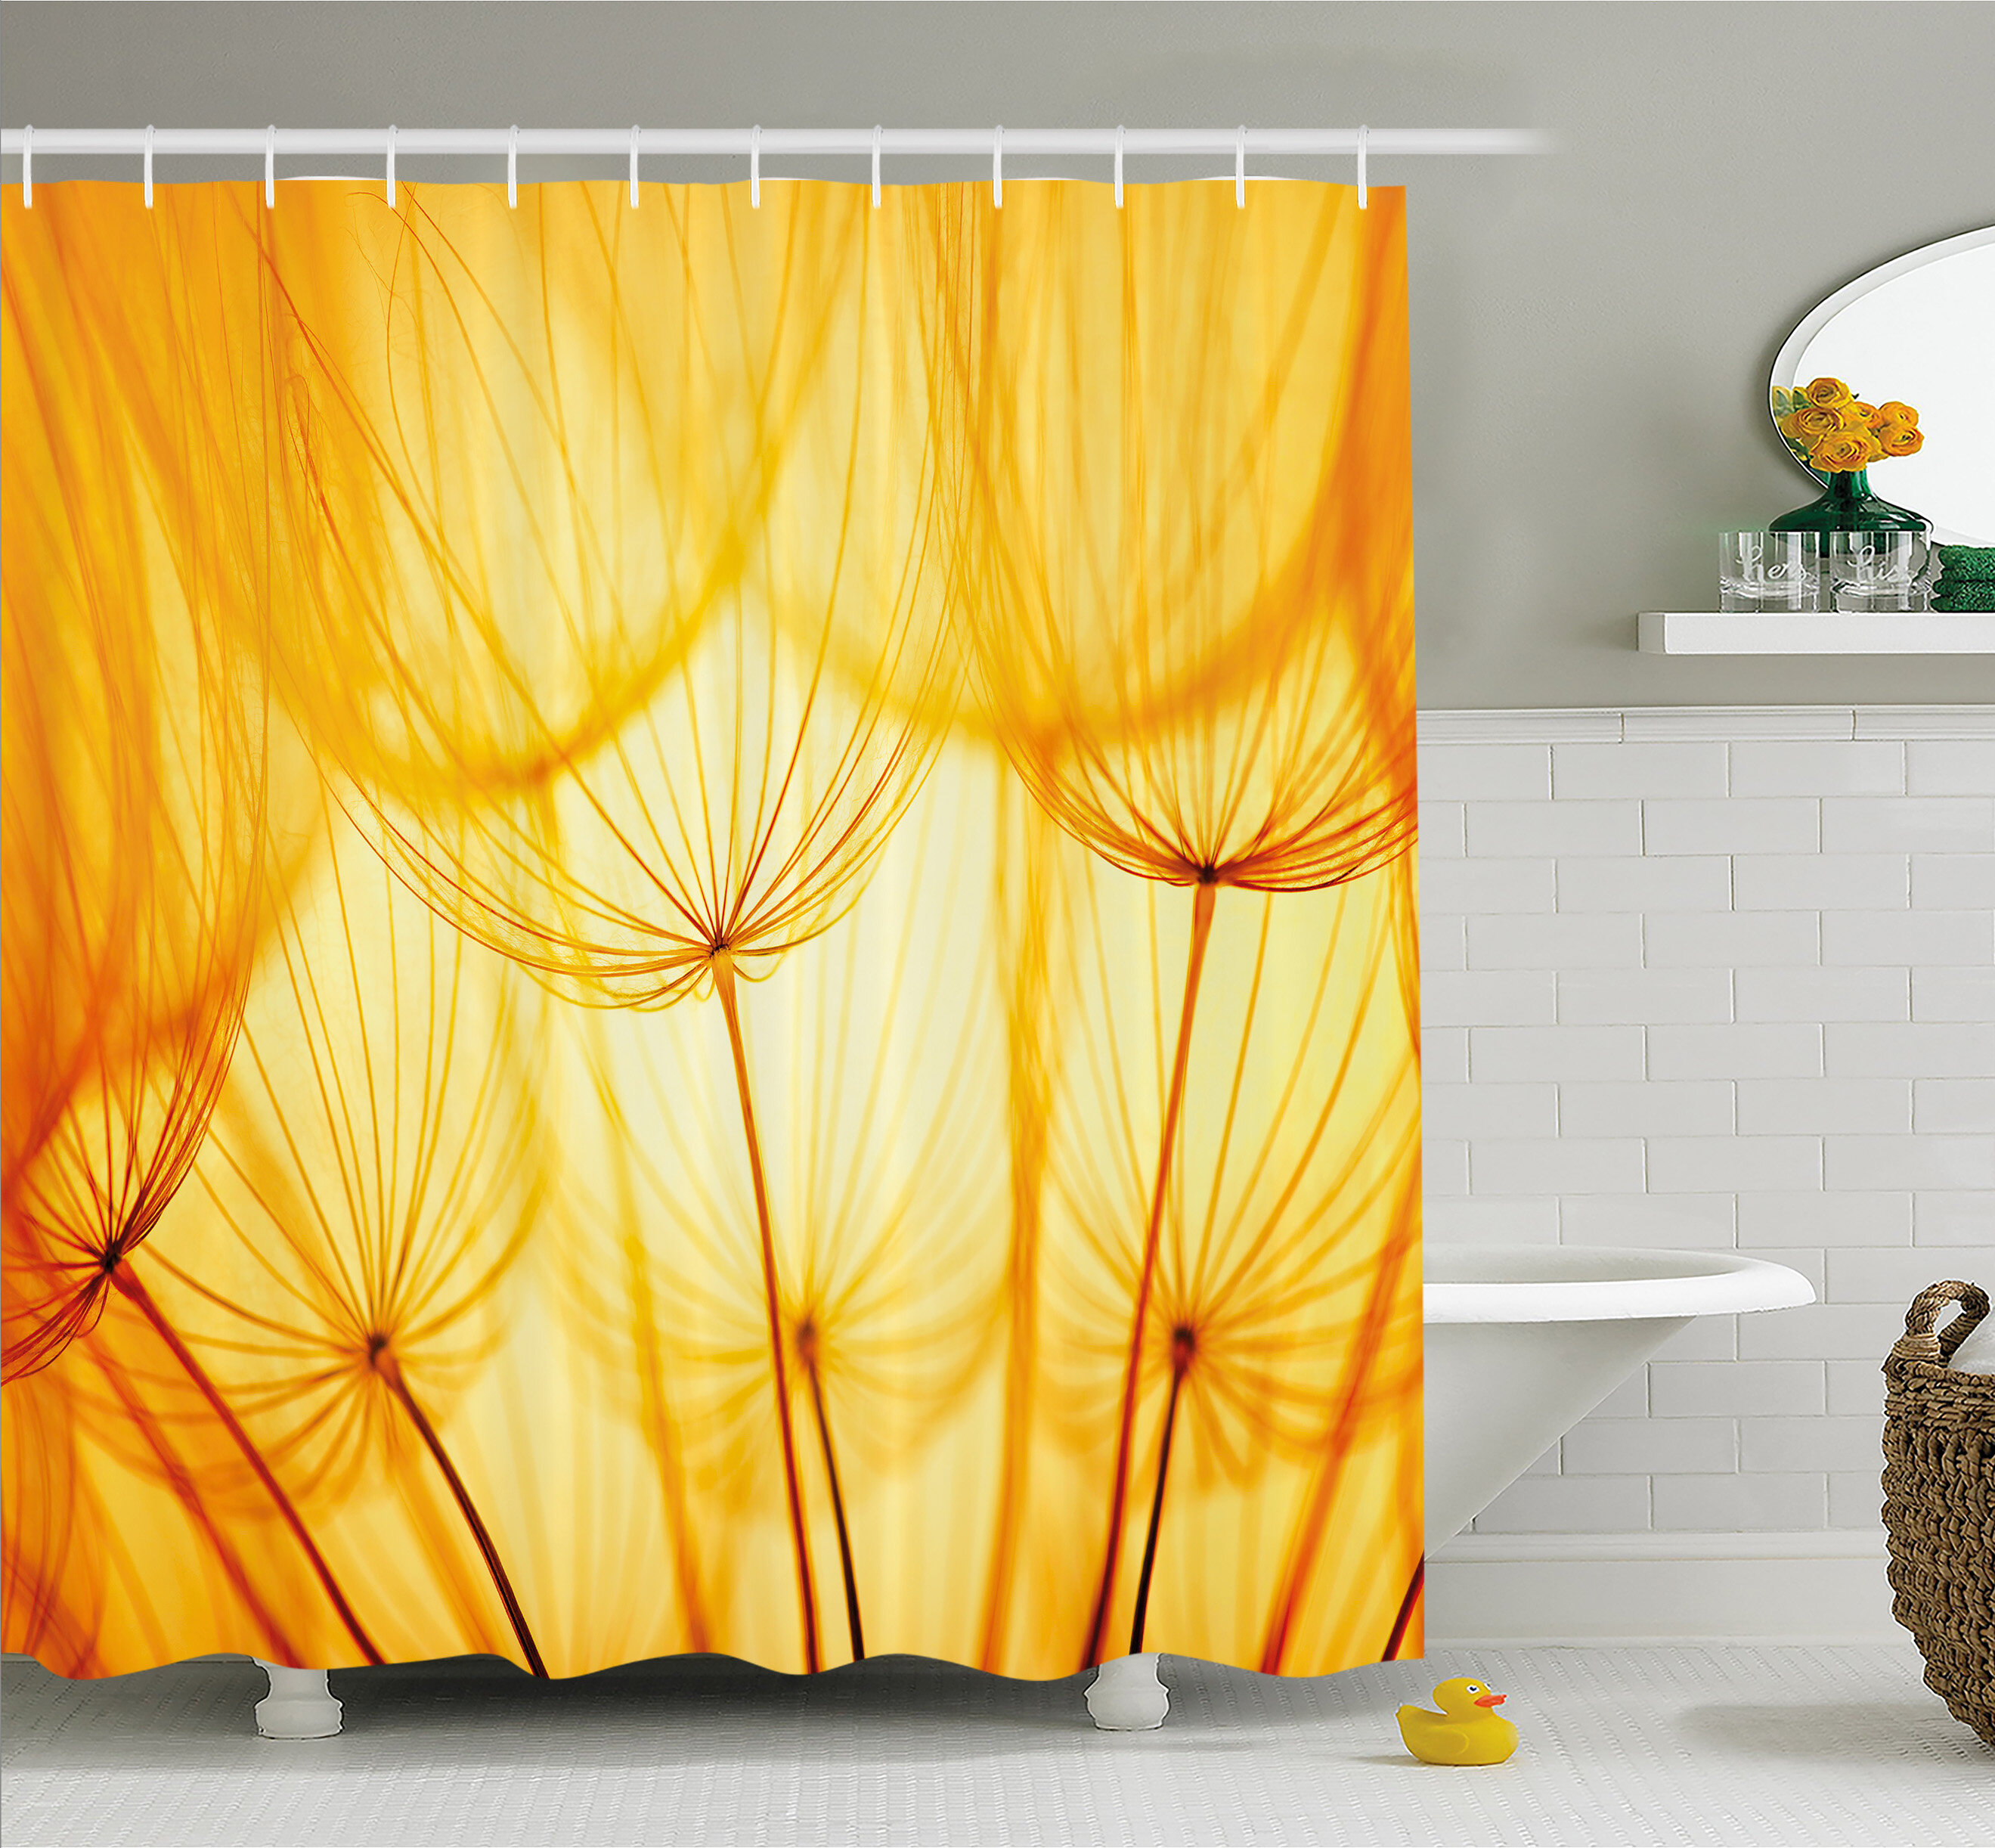 Dandelion Pattern Shower Curtain Fabric Decor Set with Hooks 4 Sizes Ambesonne 